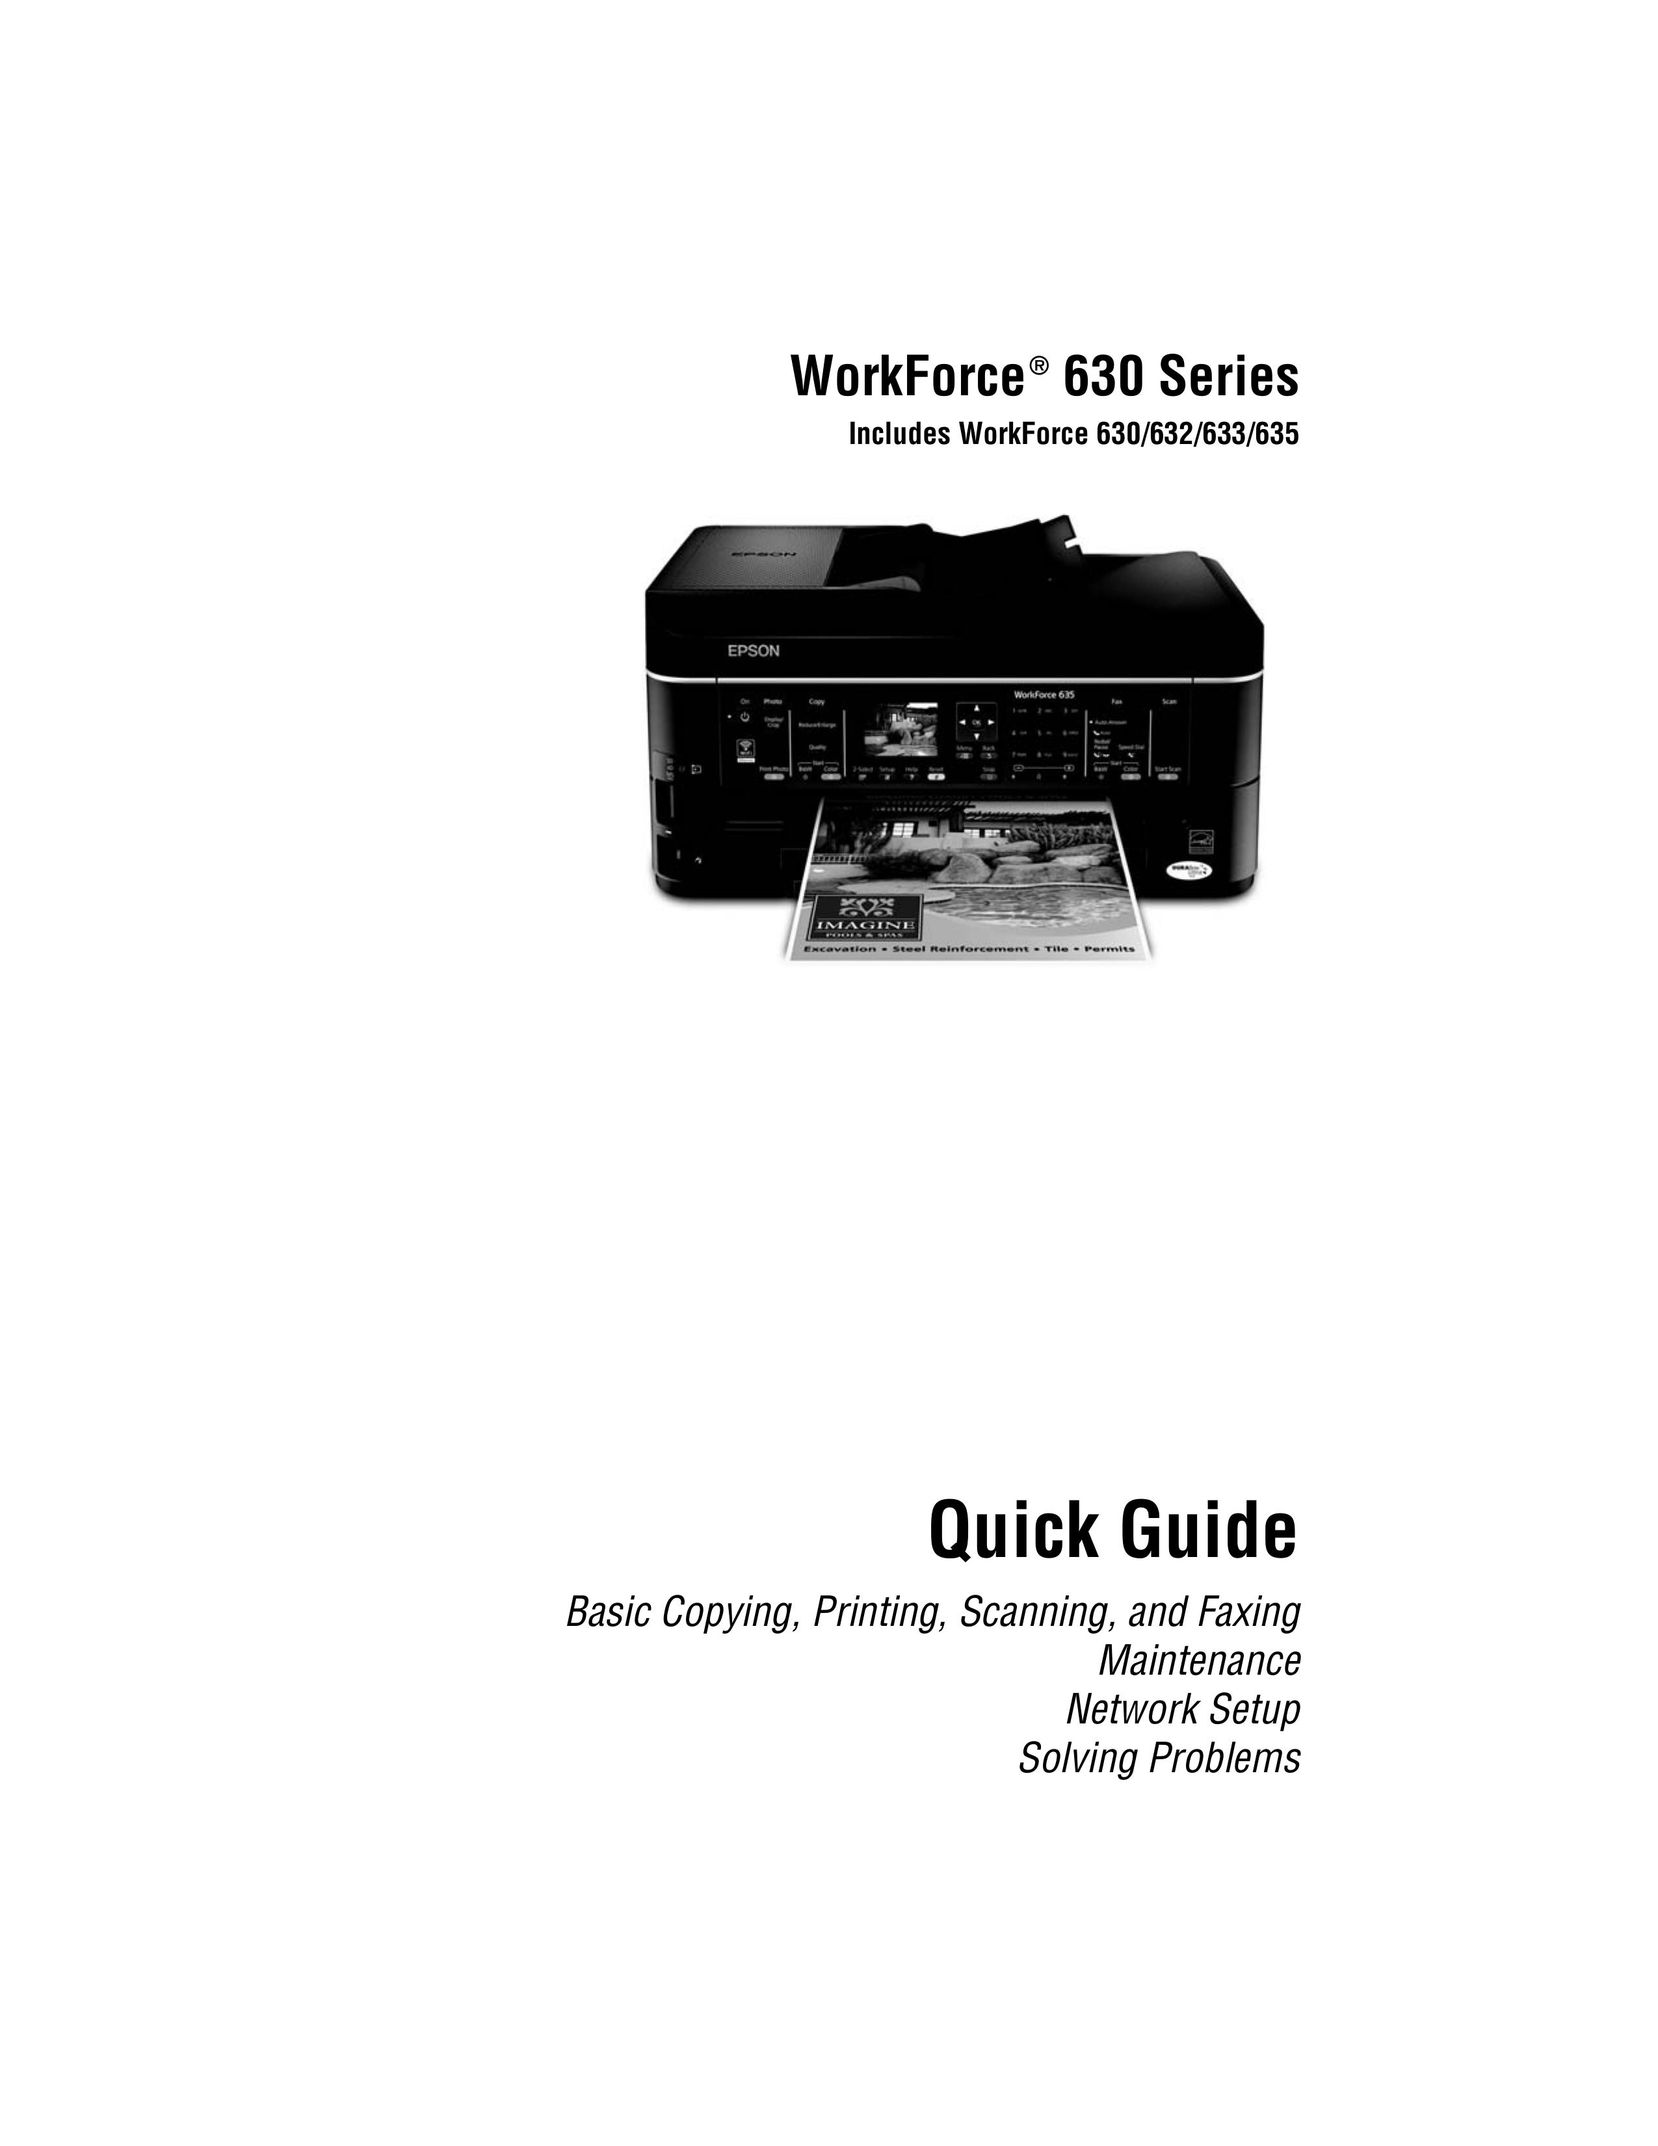 Garmin 630 Printer User Manual